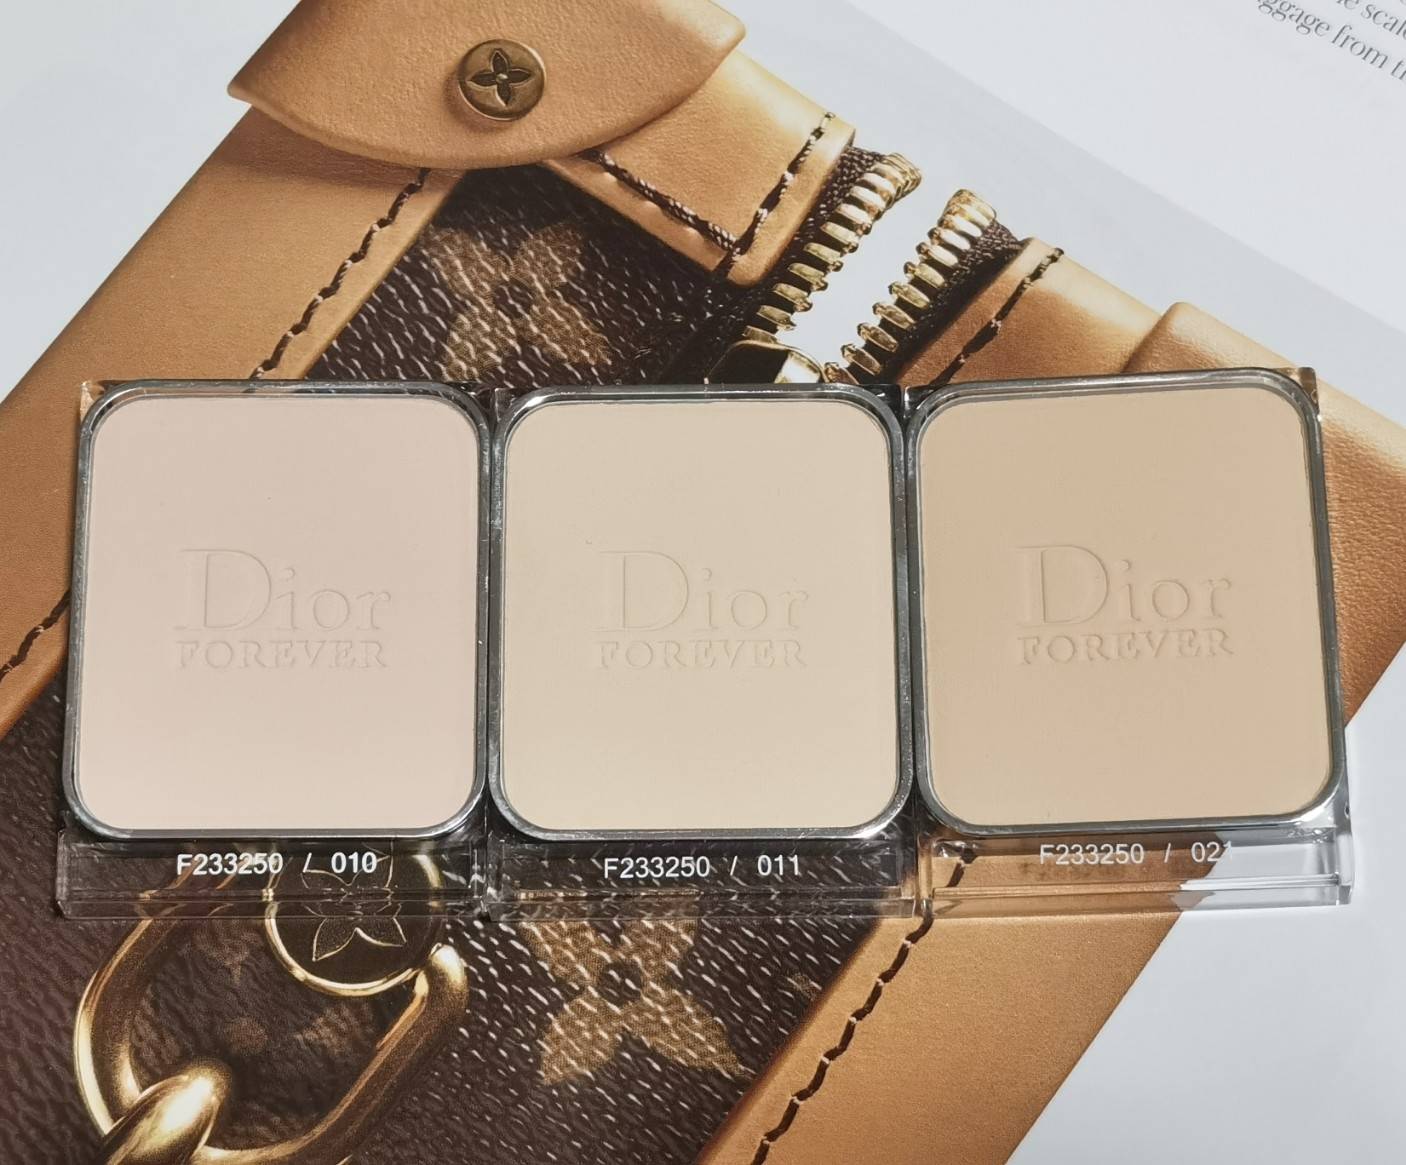 Buy Dior Skin Forever Extreme Control Perfect Matt Powder Makeup - 021 in Pakistan